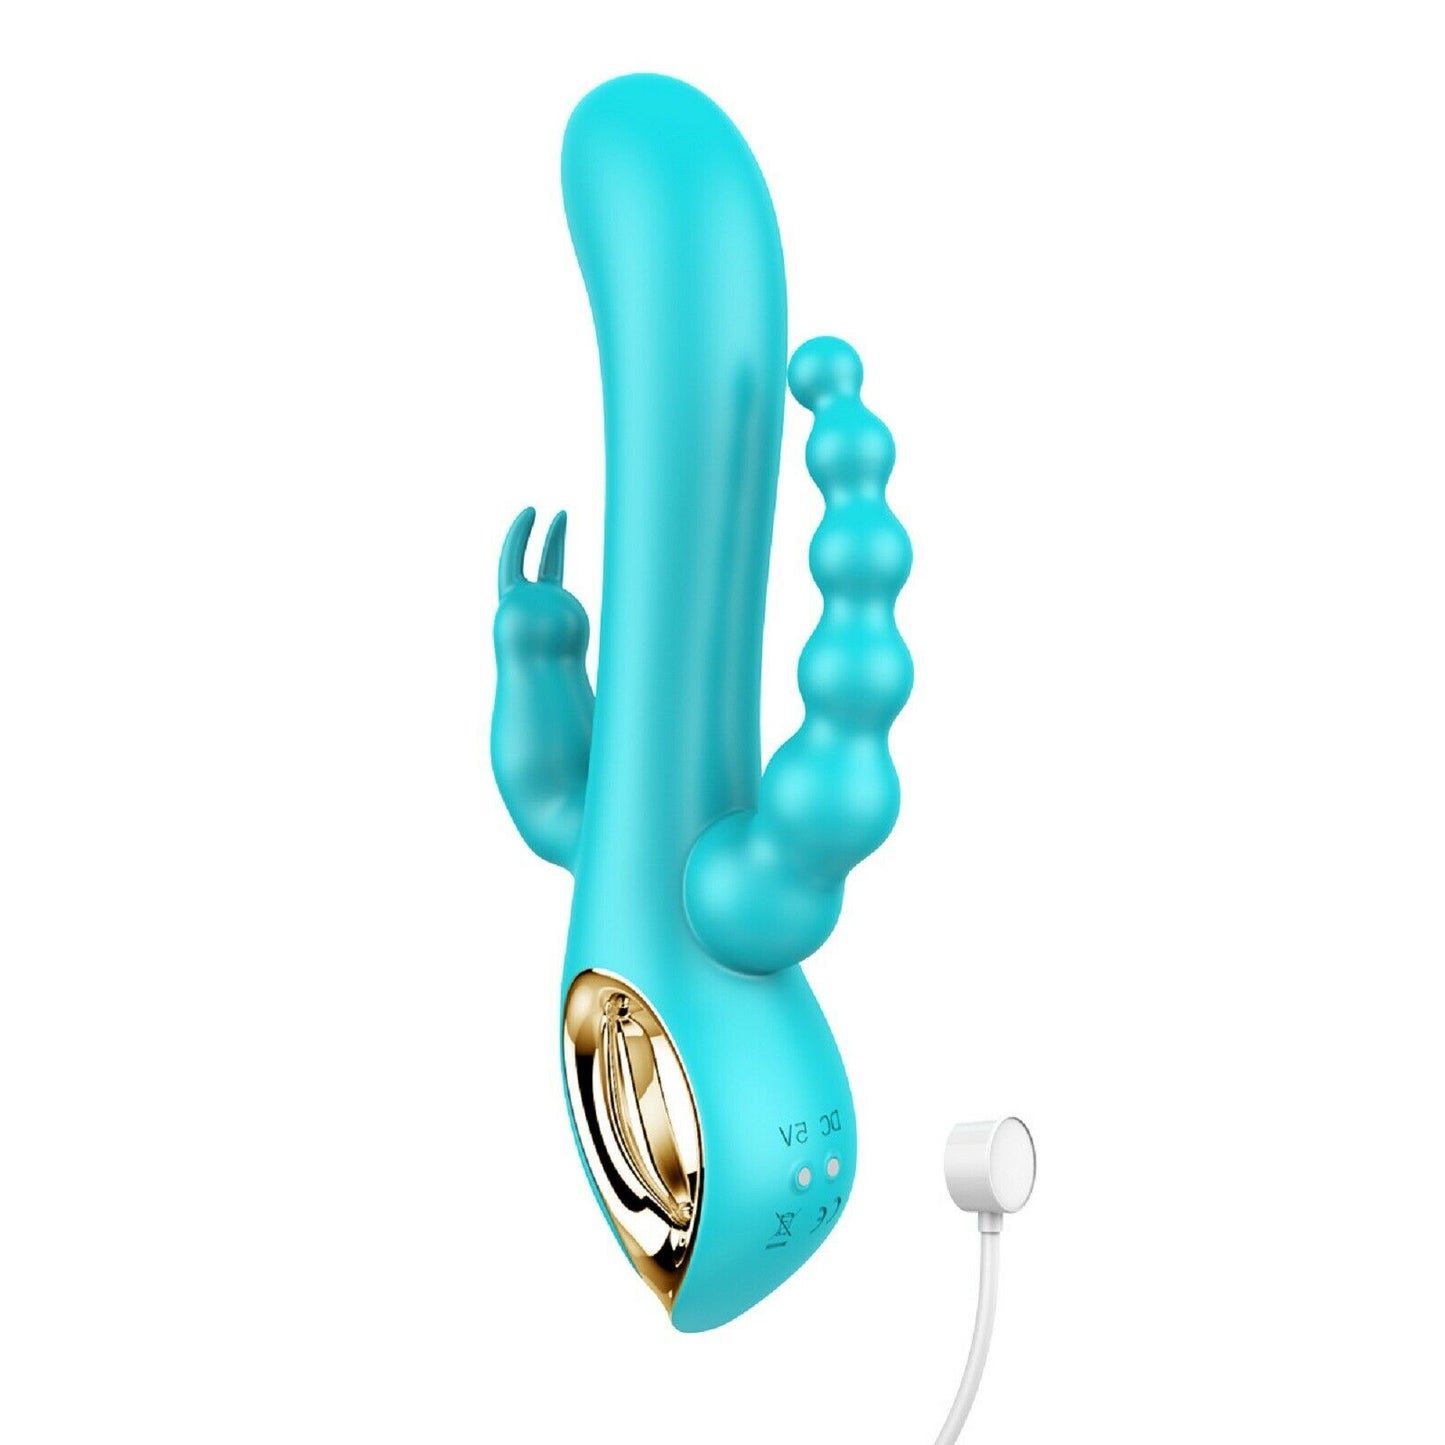 Triple Rabbit Dildo Vibrator G-Spot Clit Anal Beads Double Penetration Sex Toy